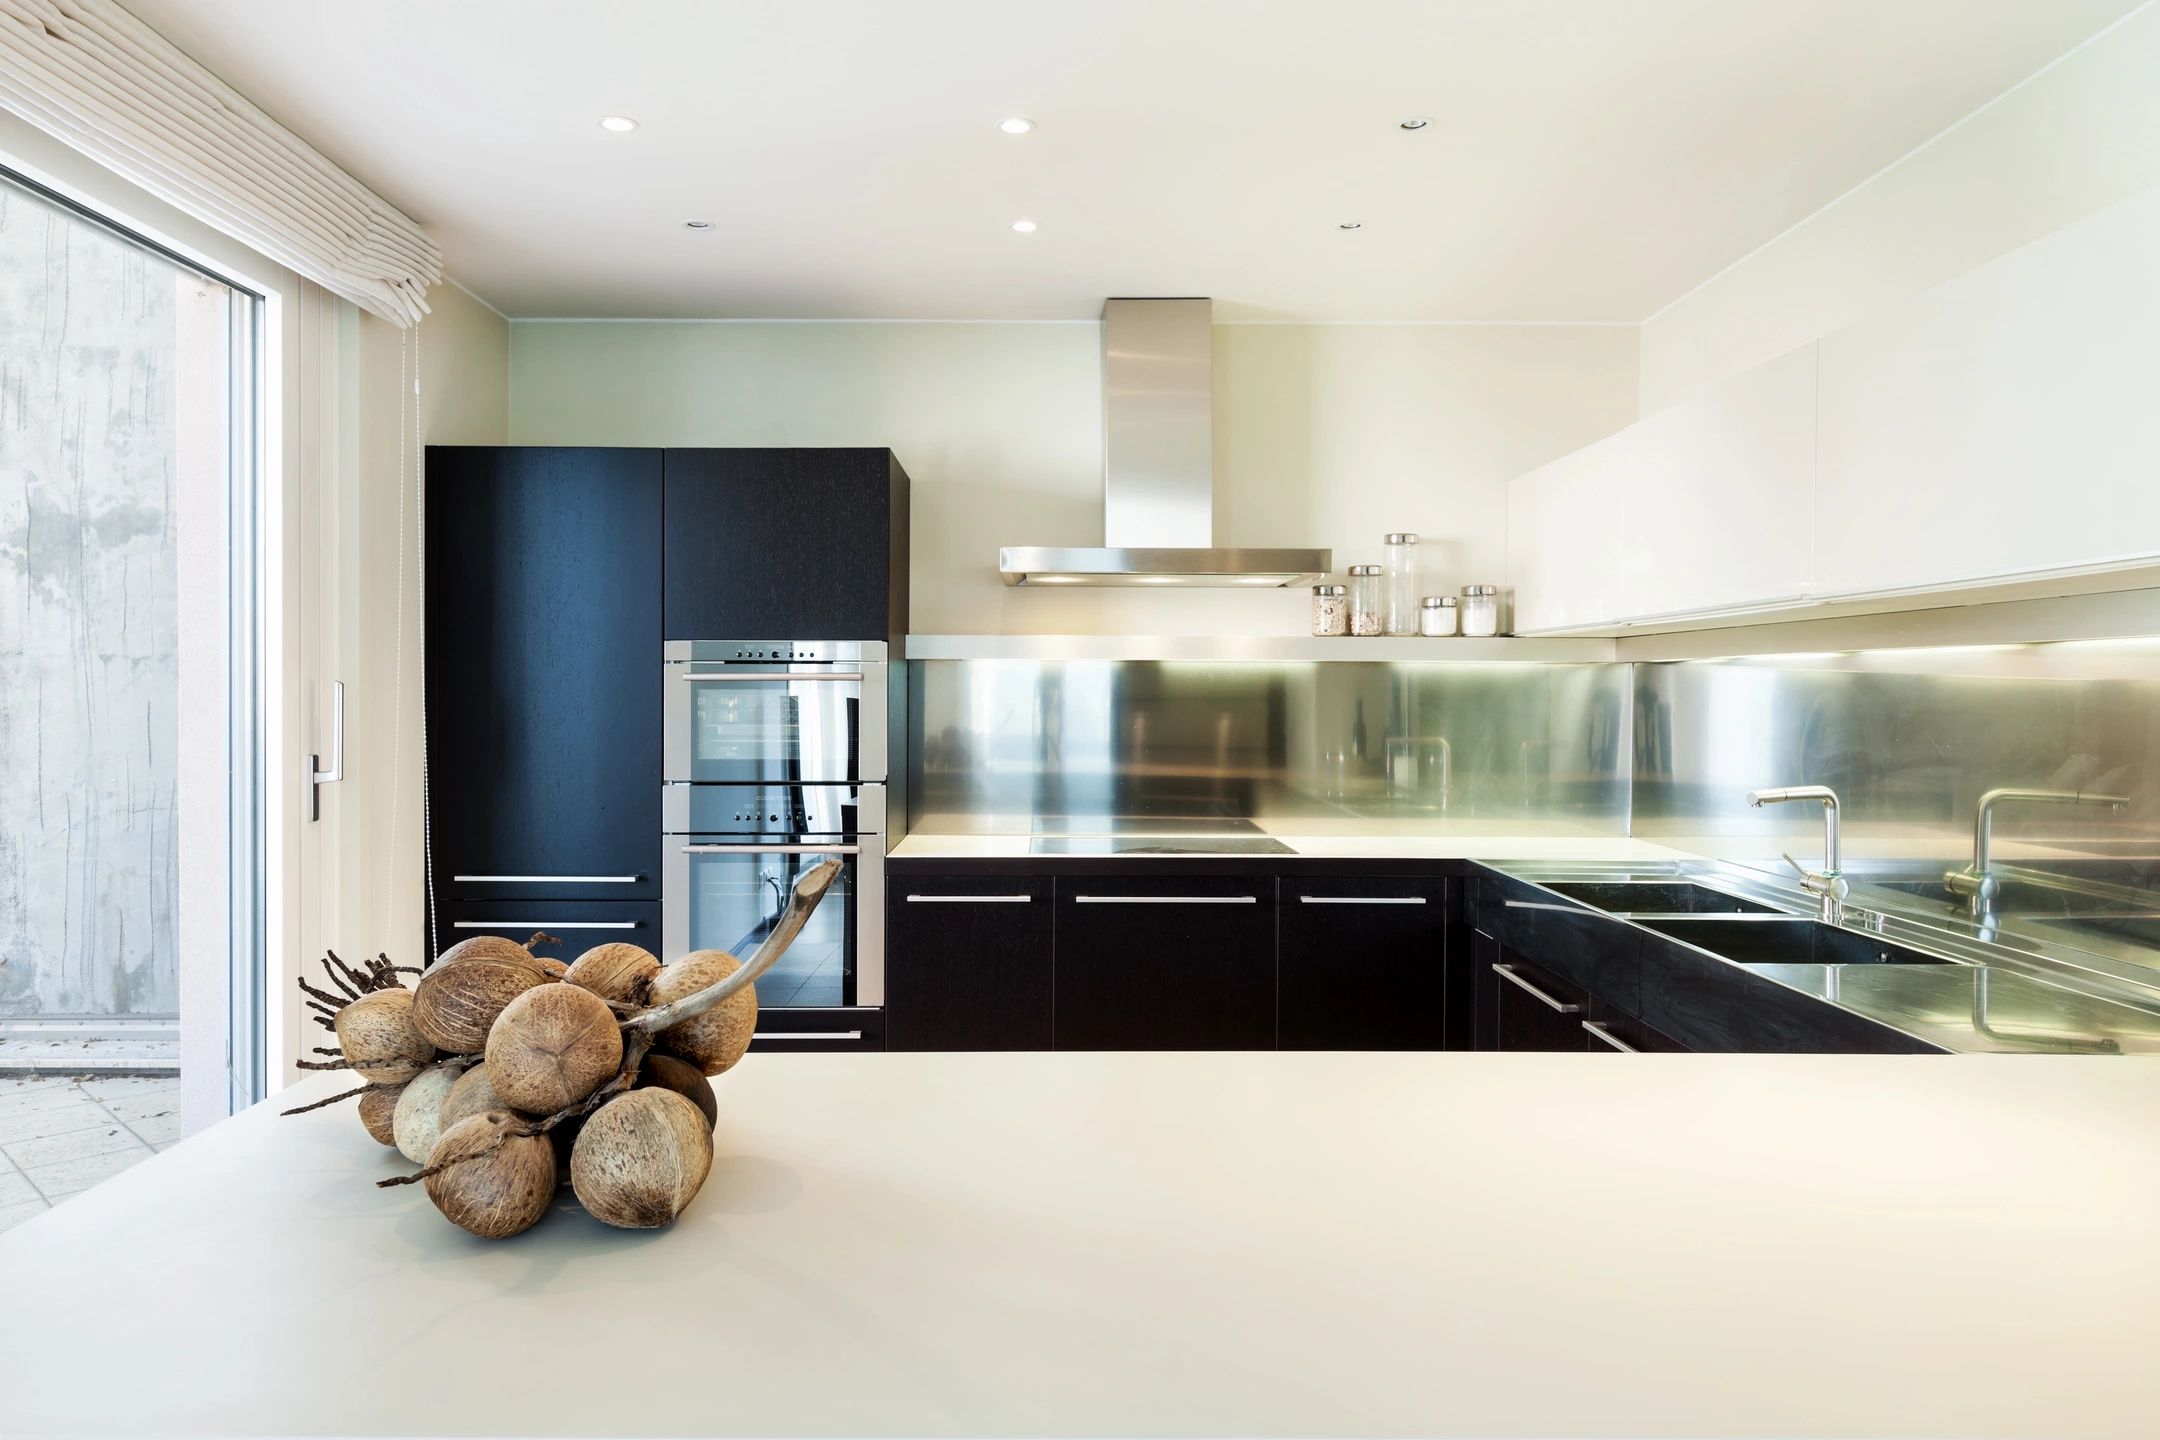 Todays Designer Kitchens qtq80-bfkWR4 Corian, Quartz or Granite? Which is the Best for Your Kitchen? 